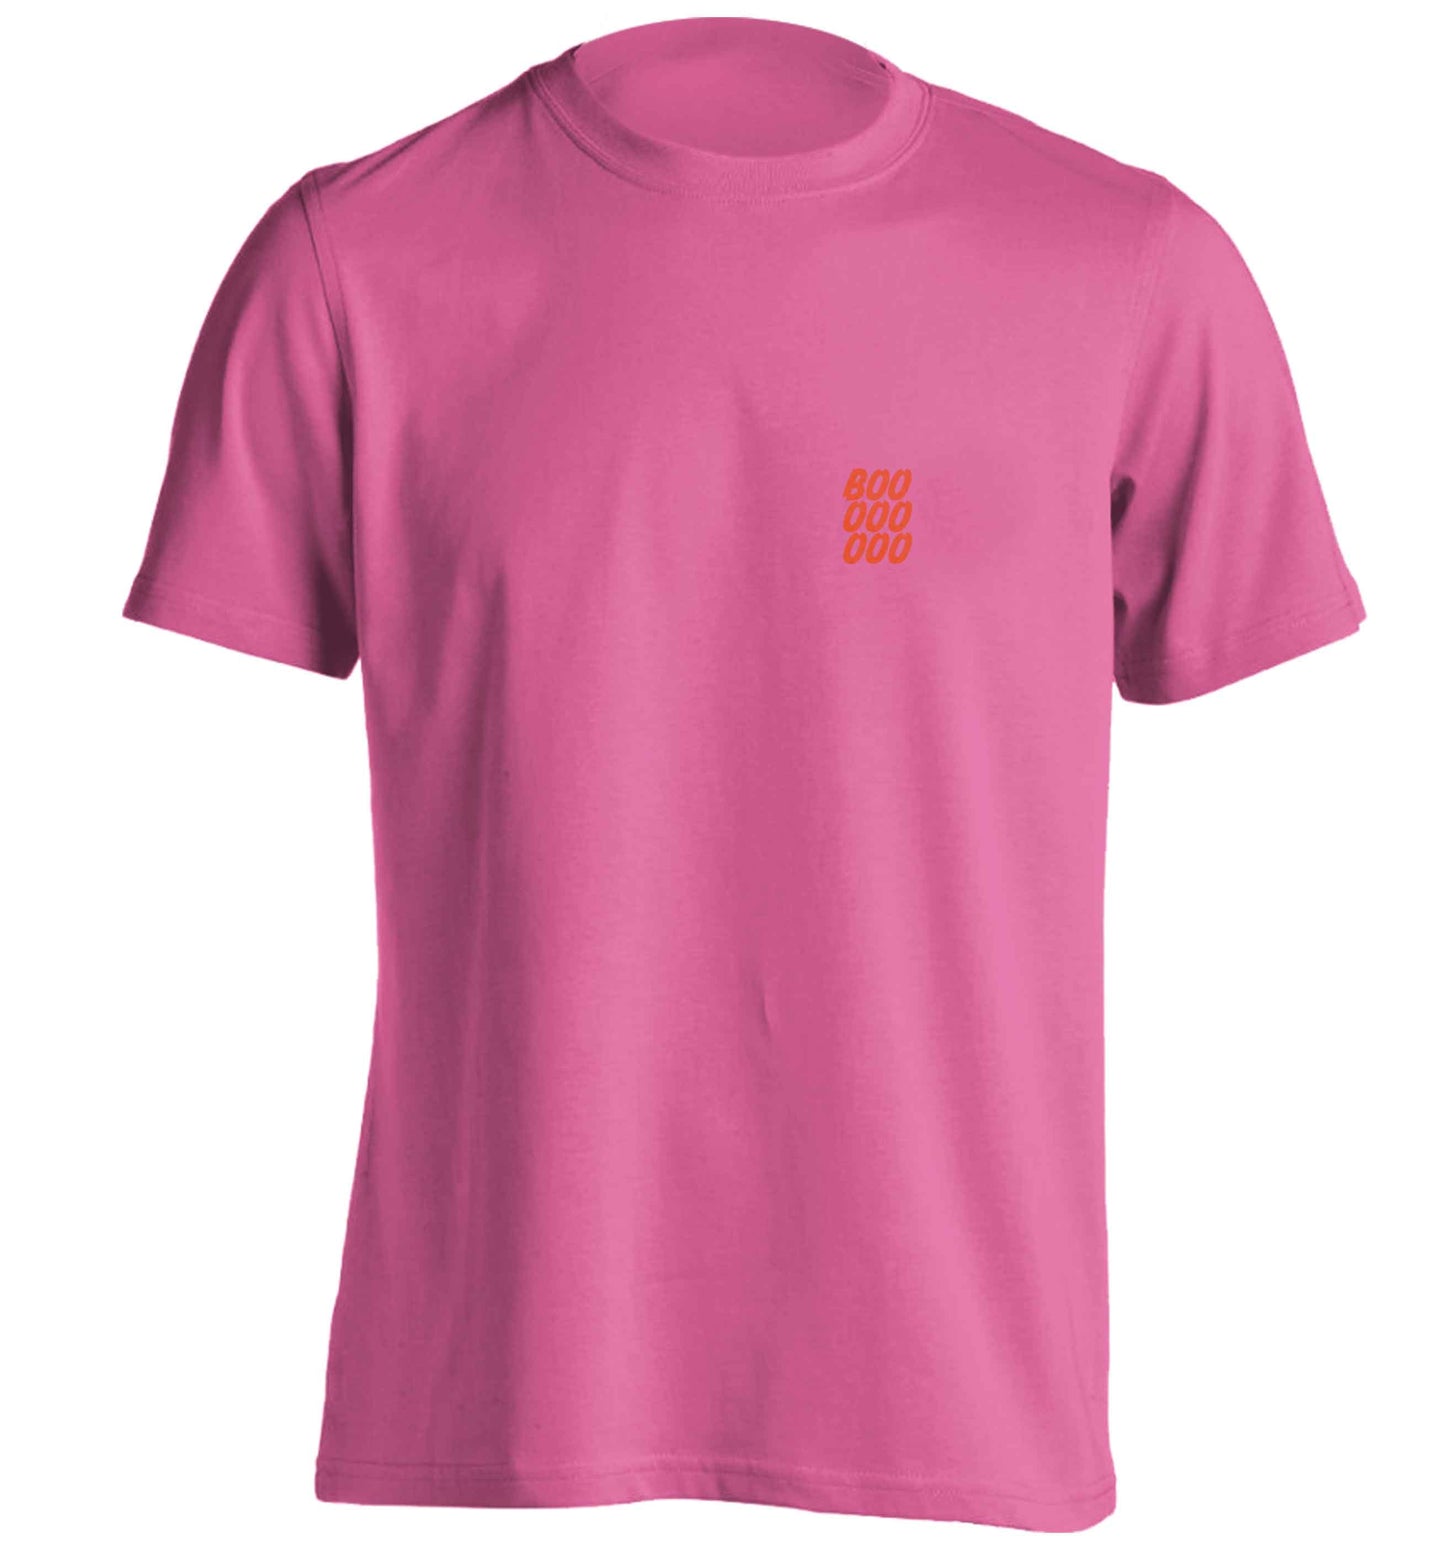 Boo pocket adults unisex pink Tshirt 2XL